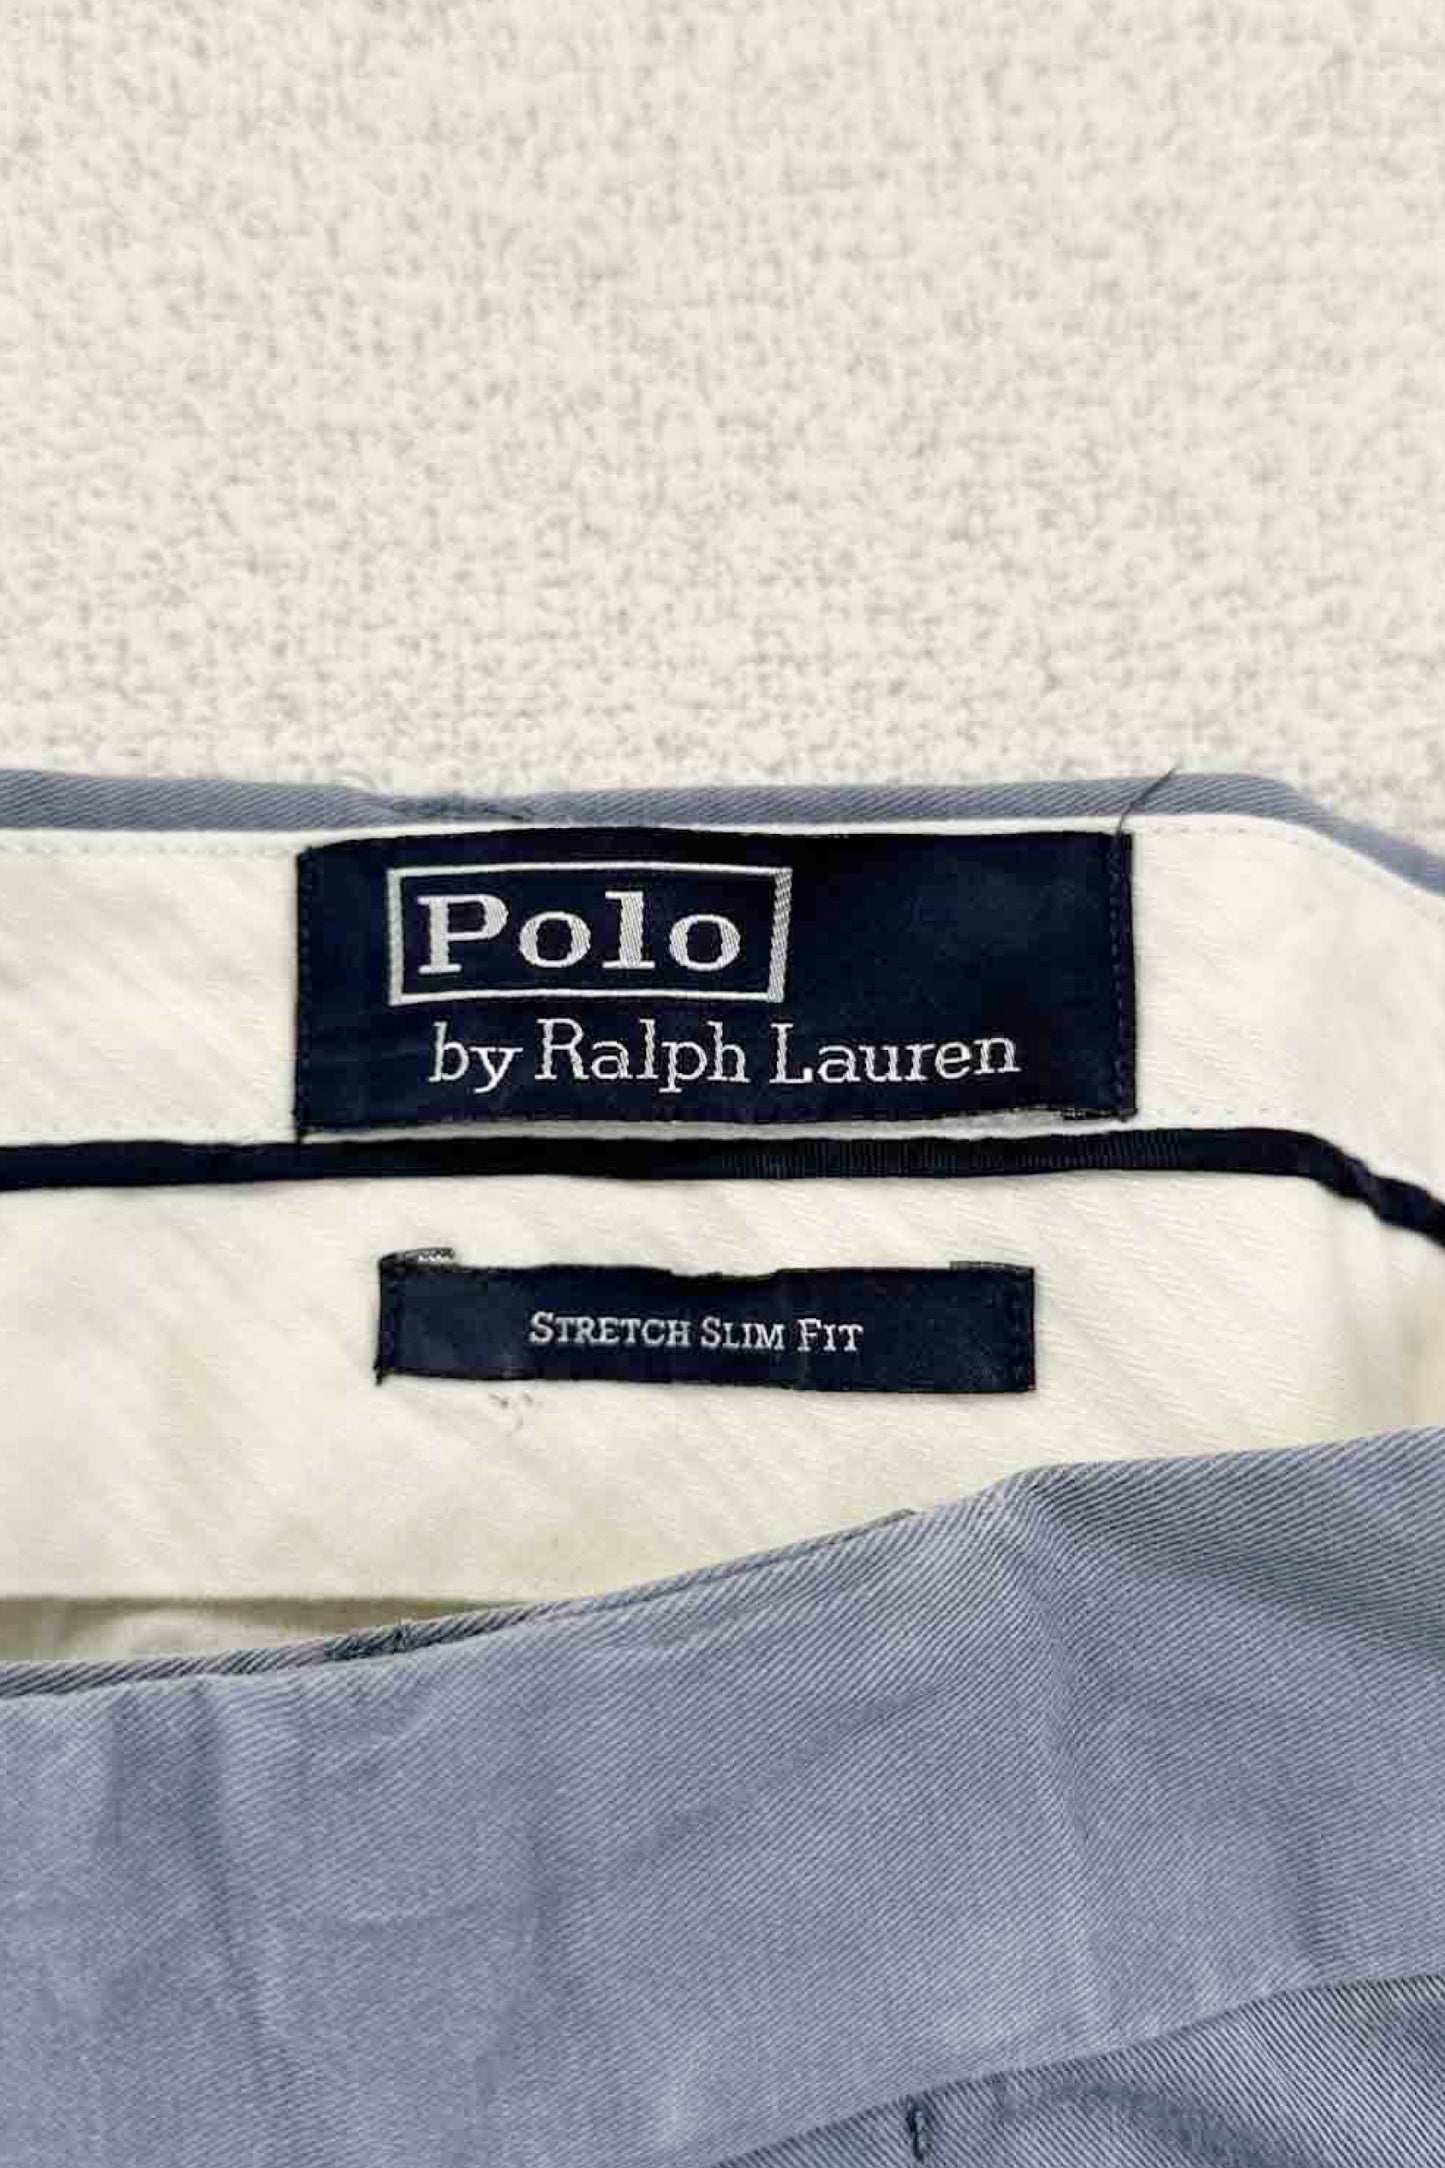 90‘s Polo by Ralph Lauren blue slacks